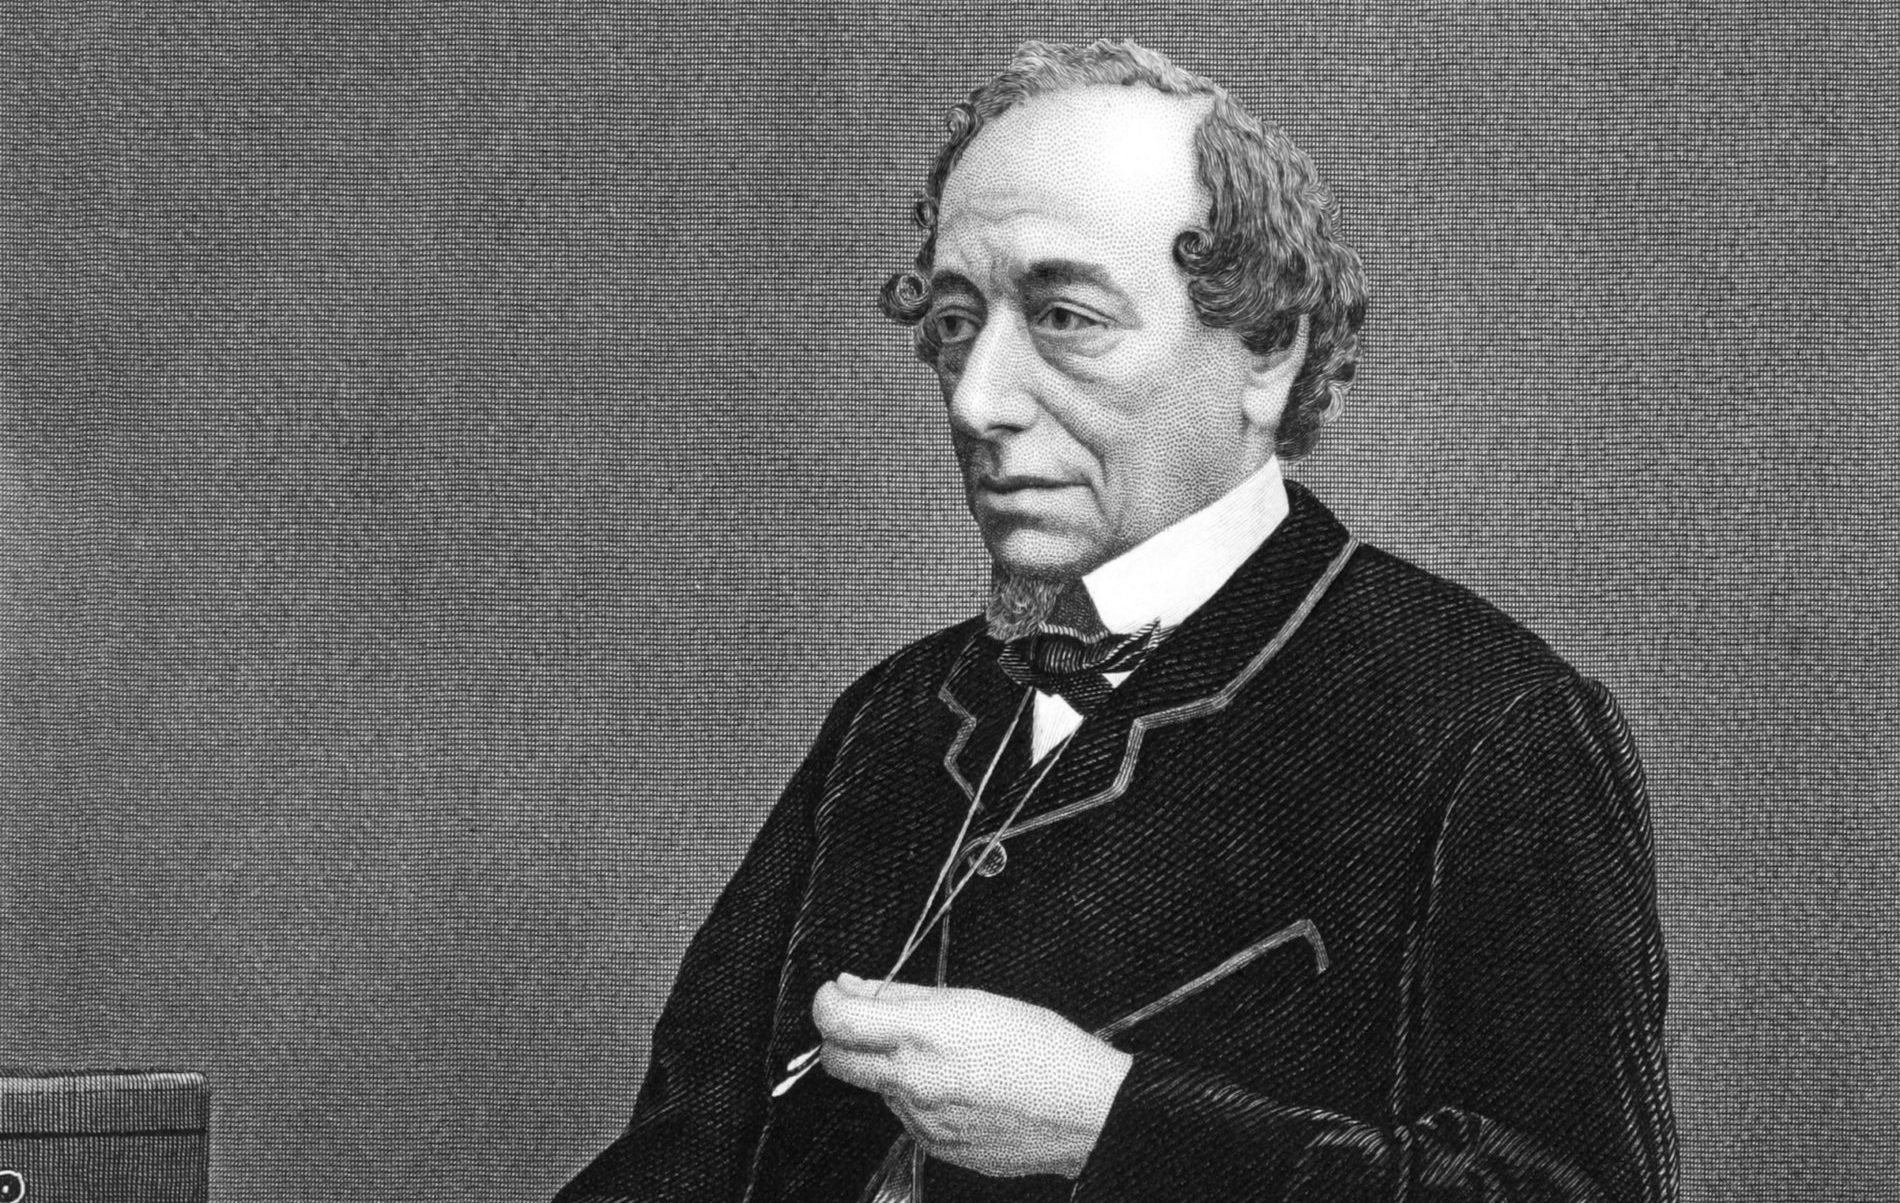 Benjamin Disraeli, 1st Earl of Beaconsfield